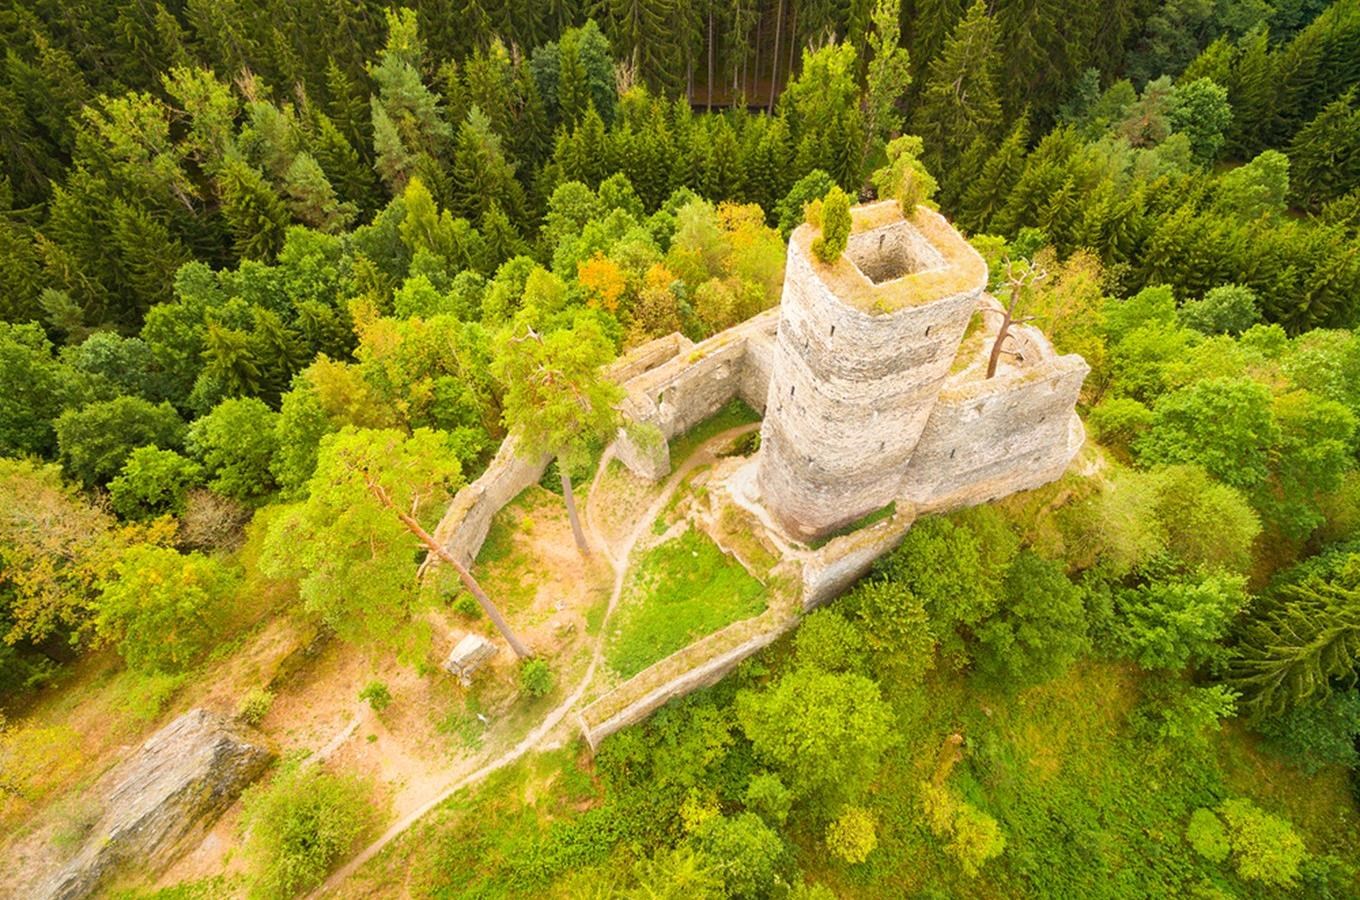 Gutštejn – romantická zřícenina gotického hradu